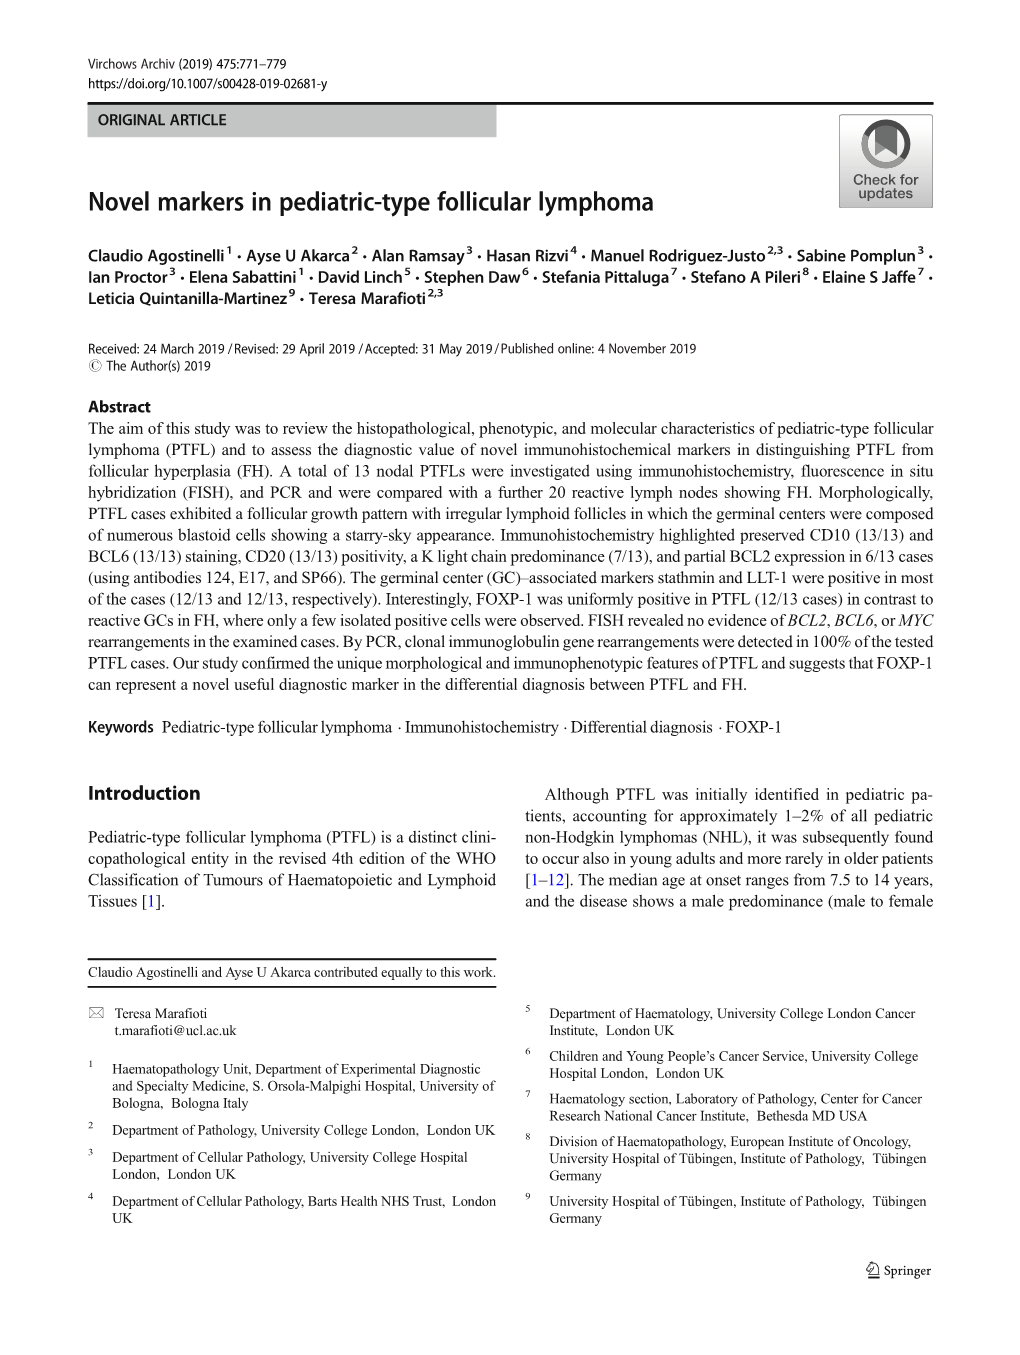 Novel Markers in Pediatric-Type Follicular Lymphoma